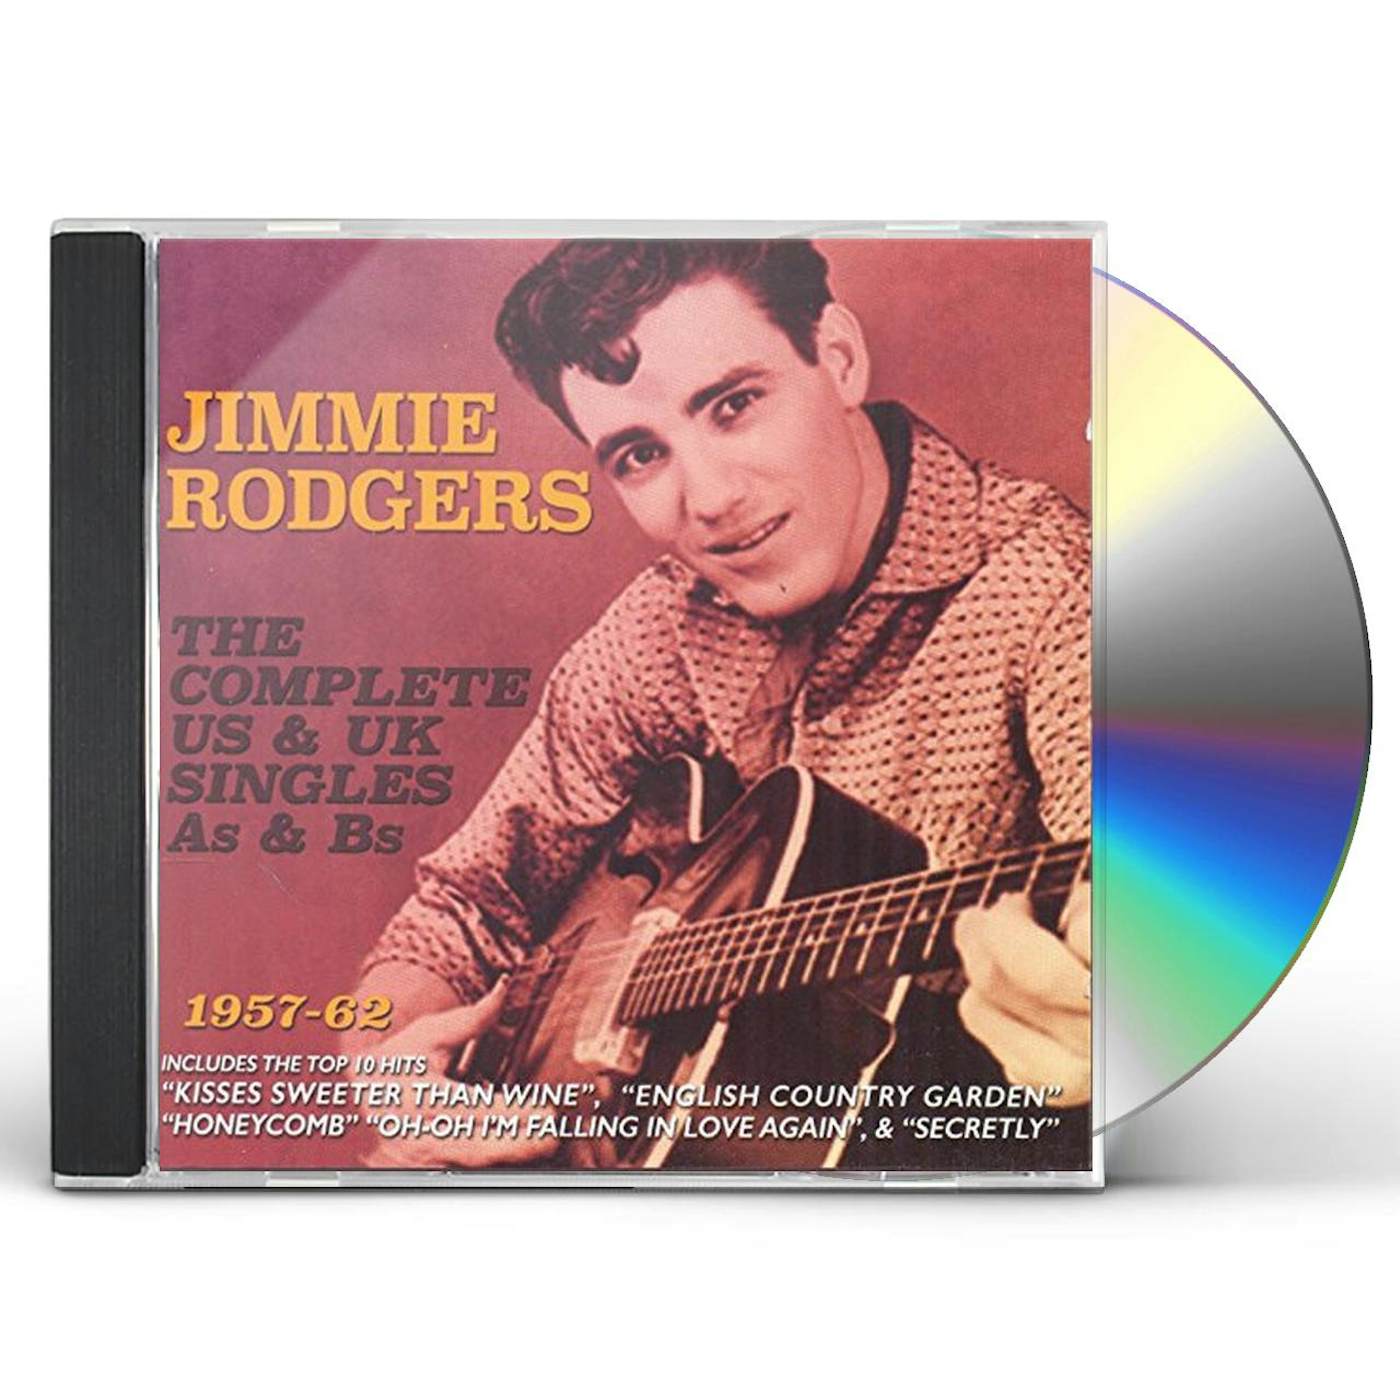 Jimmie Rodgers COMPLETE US & UK SINGLES AS & BS 1957-62 CD